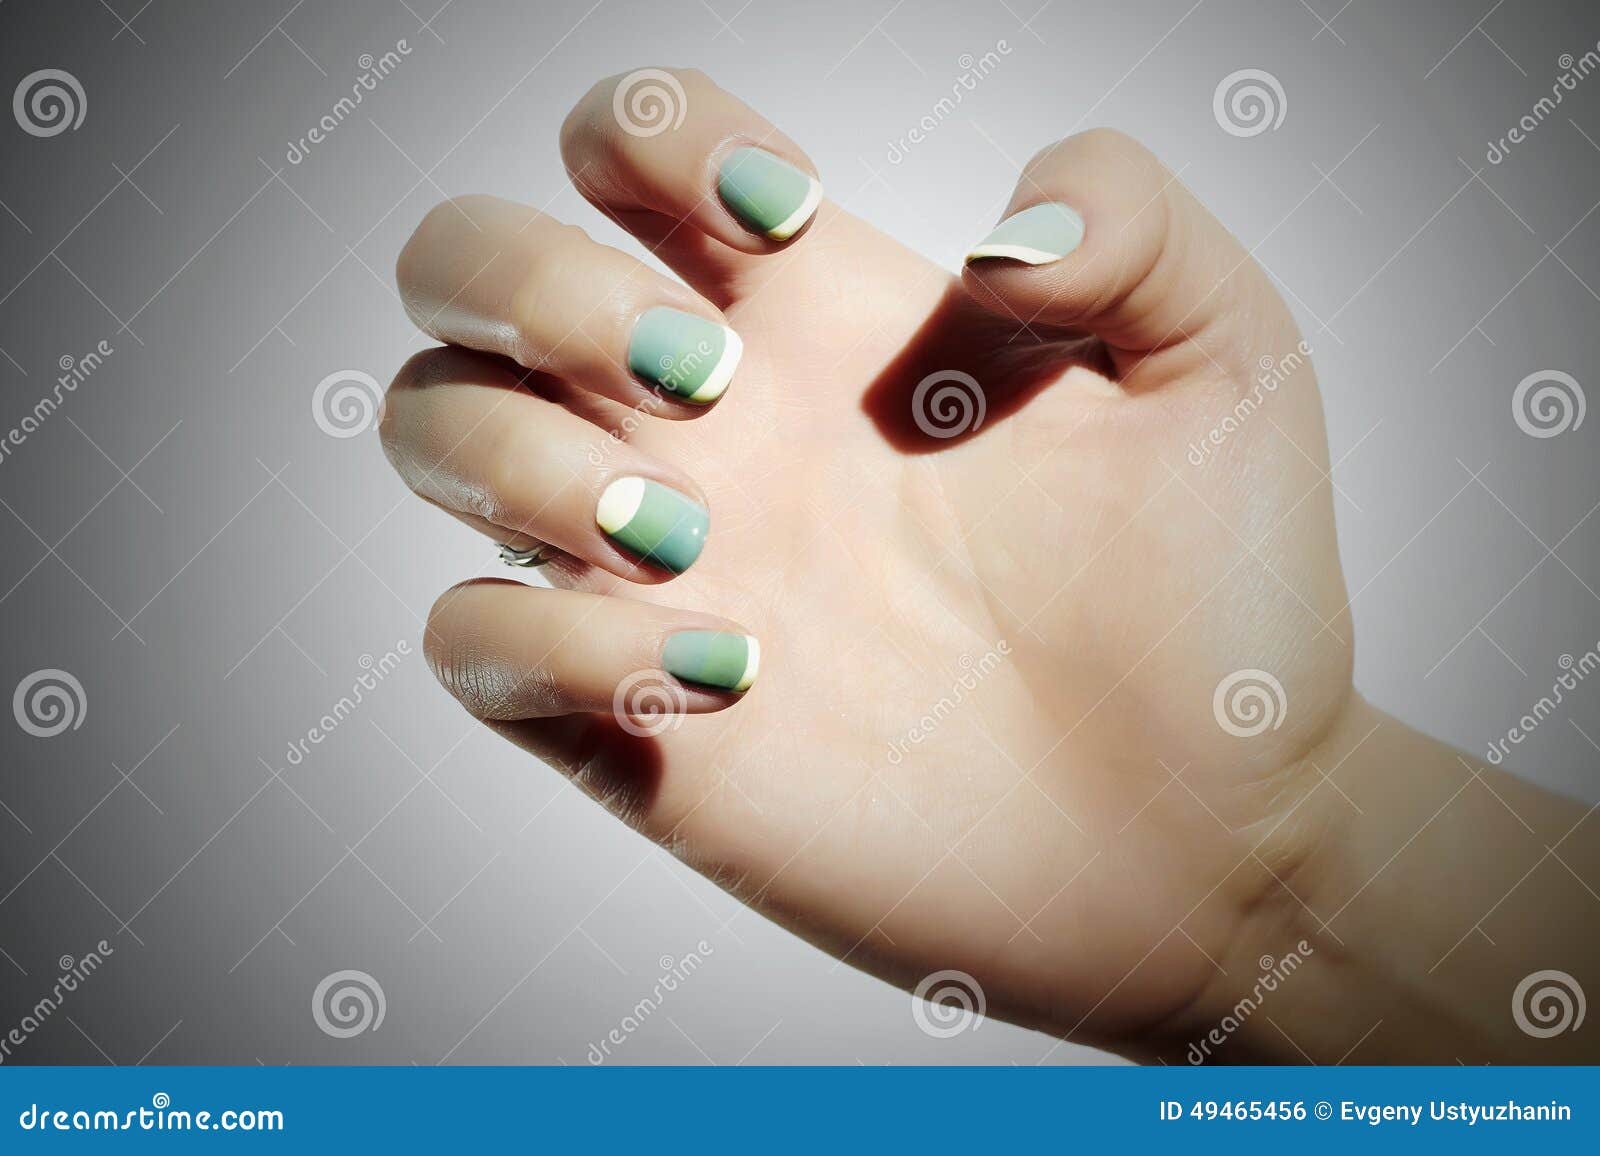 manicure.female hands.in beauty salon woman.shellac polish.nail